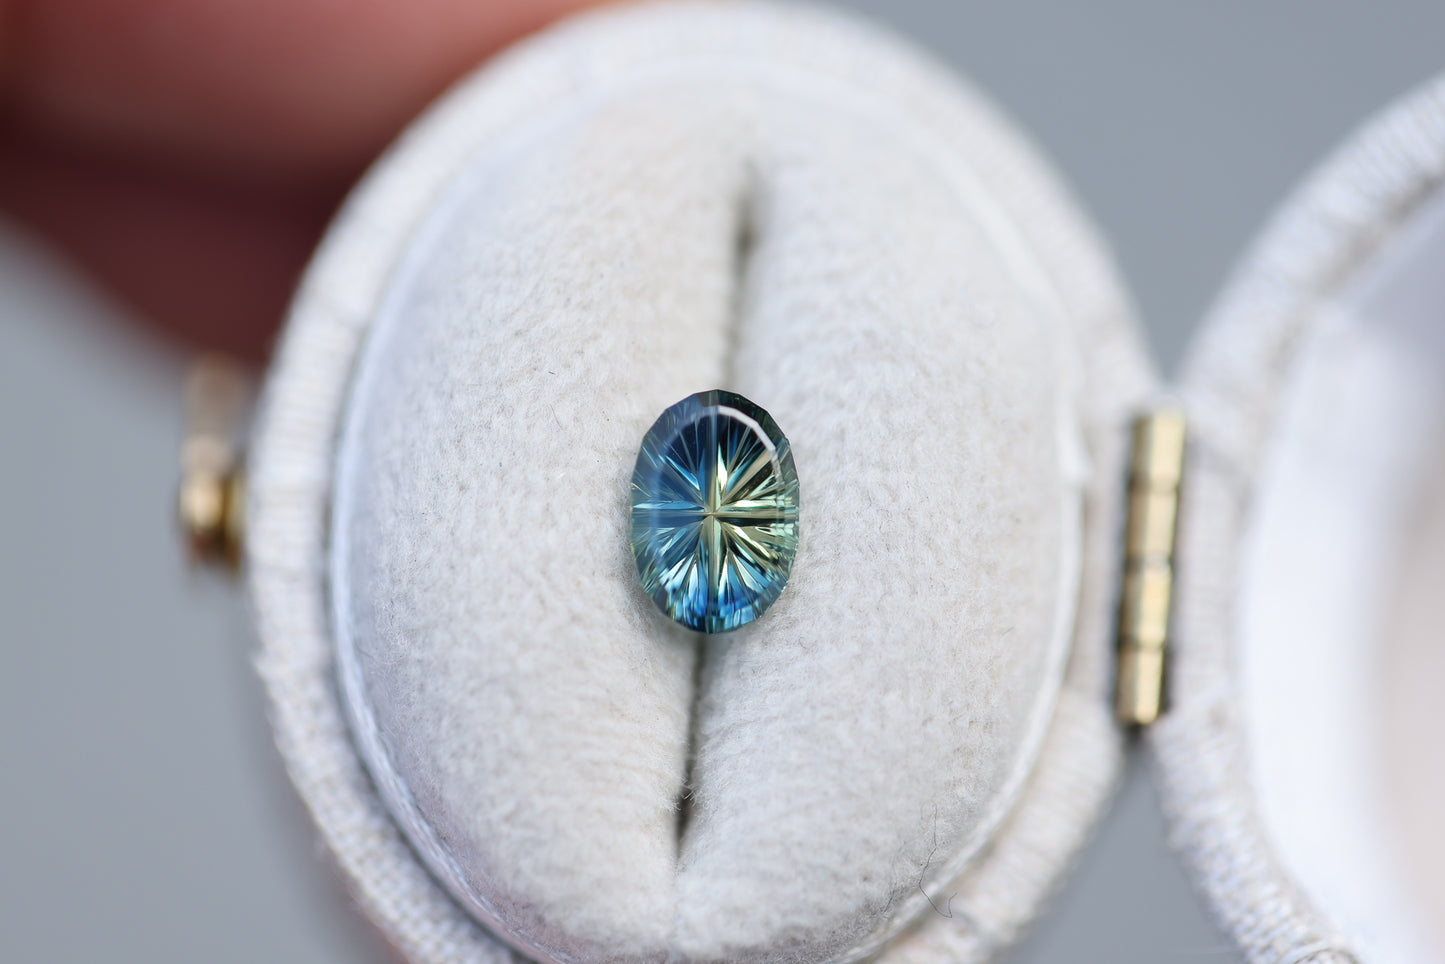 1ct oval blue green parti sapphire- Starbrite cut by John Dyer